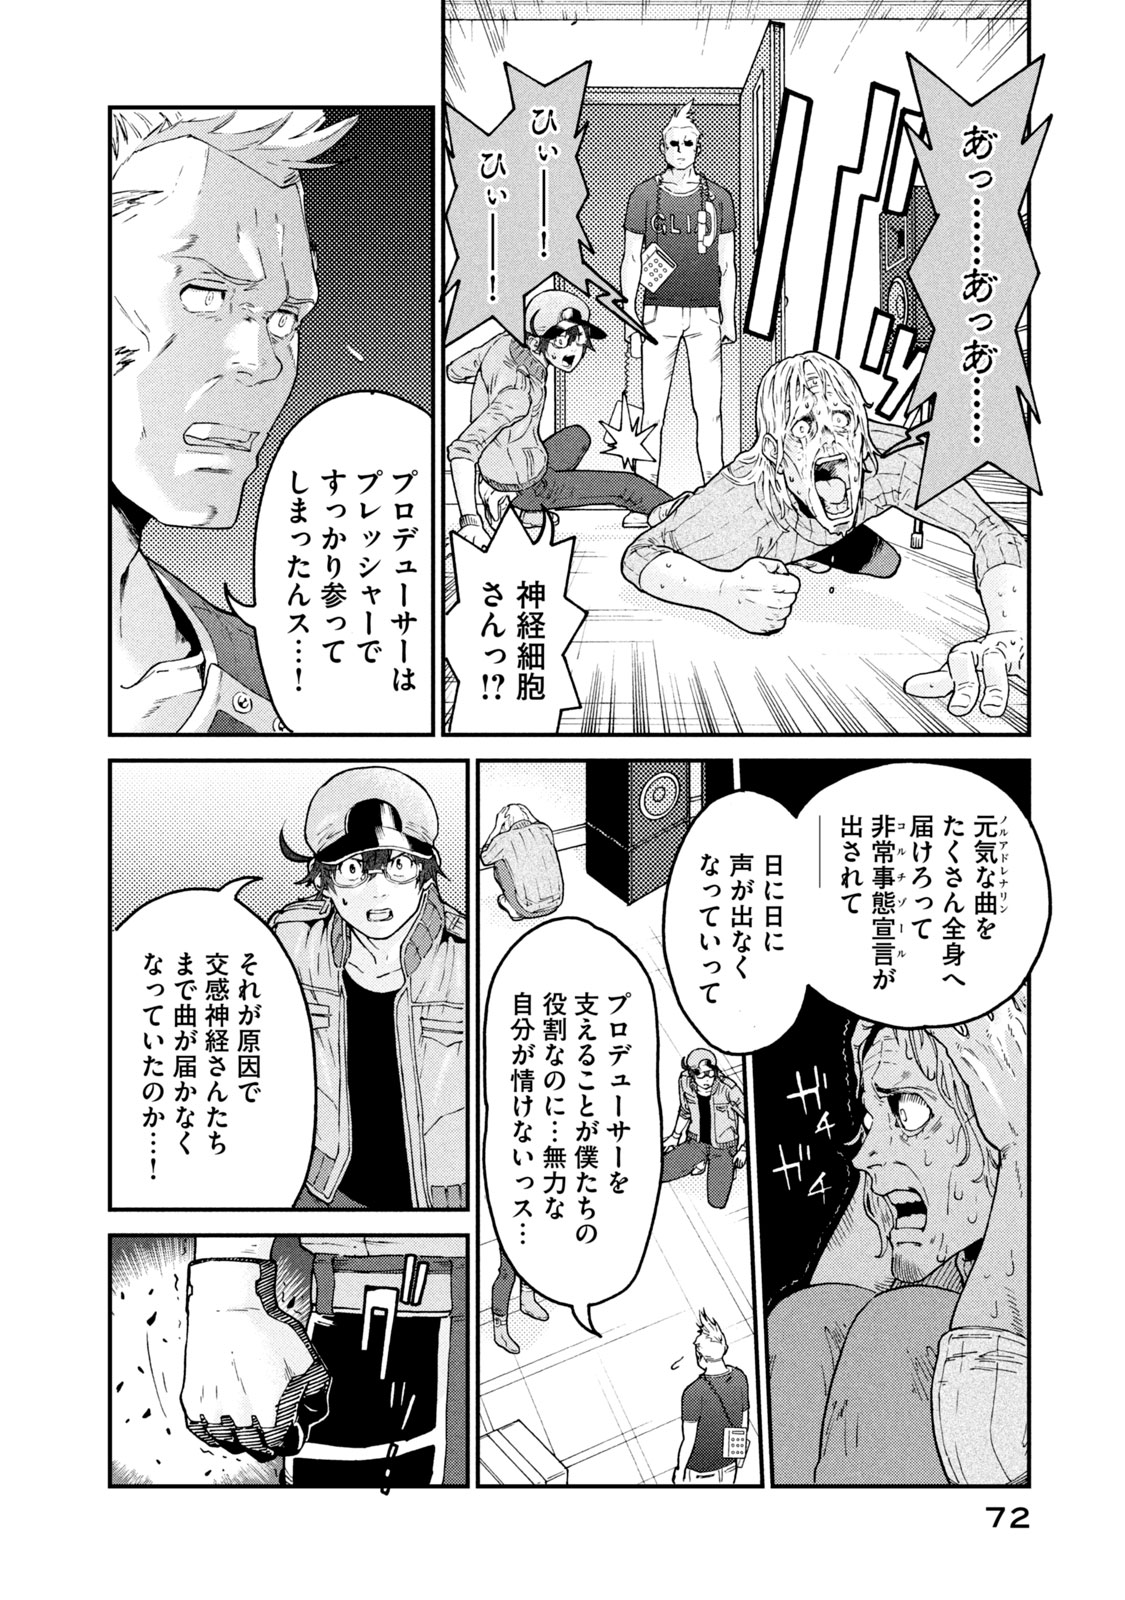 Hataraku Saibou BLACK - Chapter 34 - Page 10